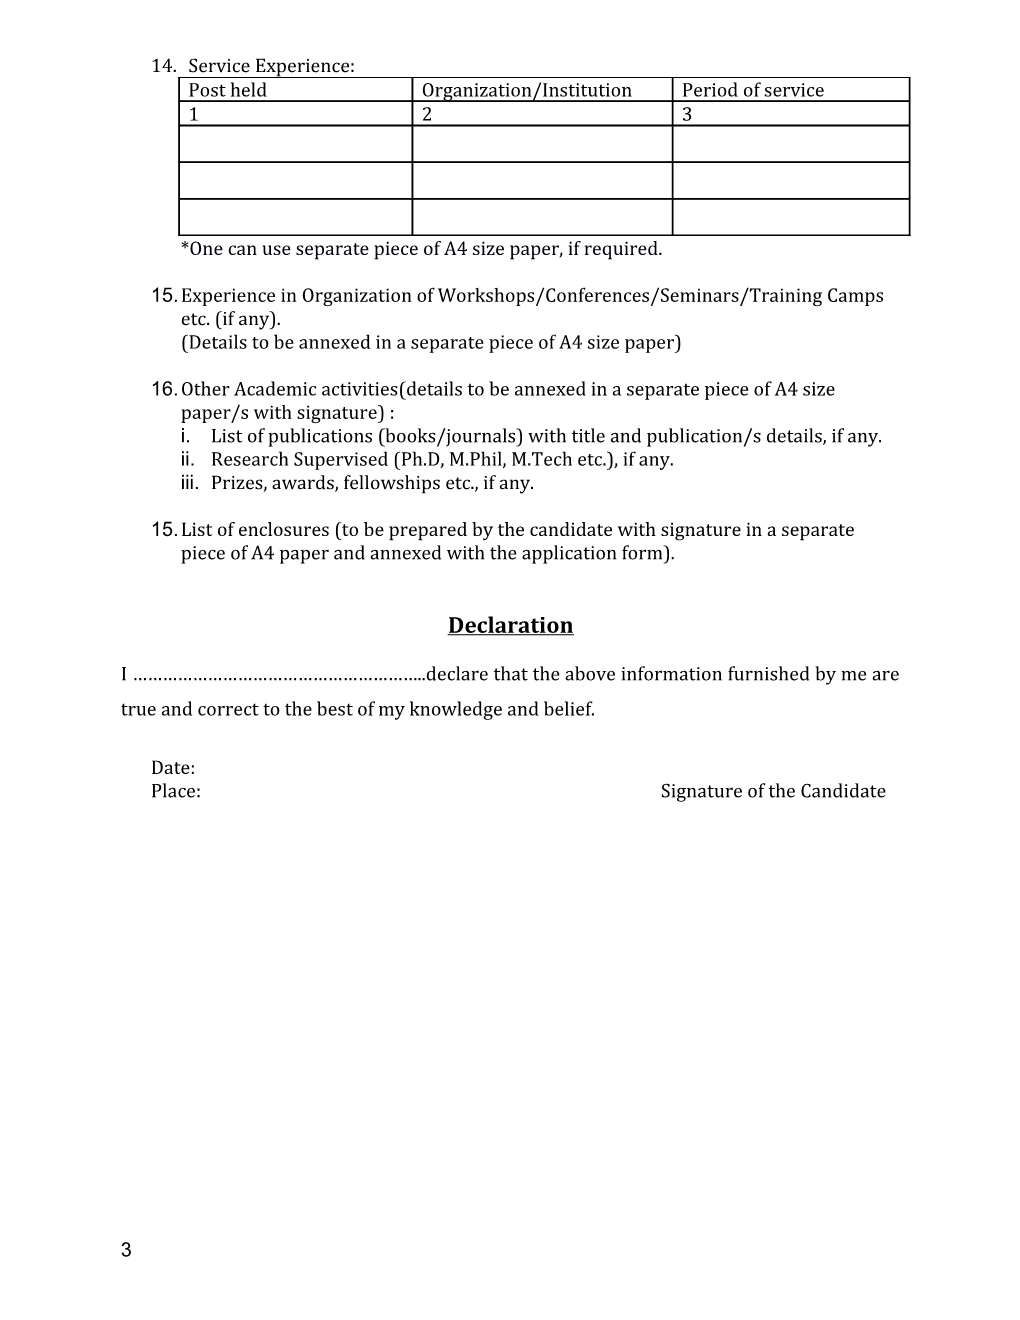 Application Form for Filling up of the Post of Registrar